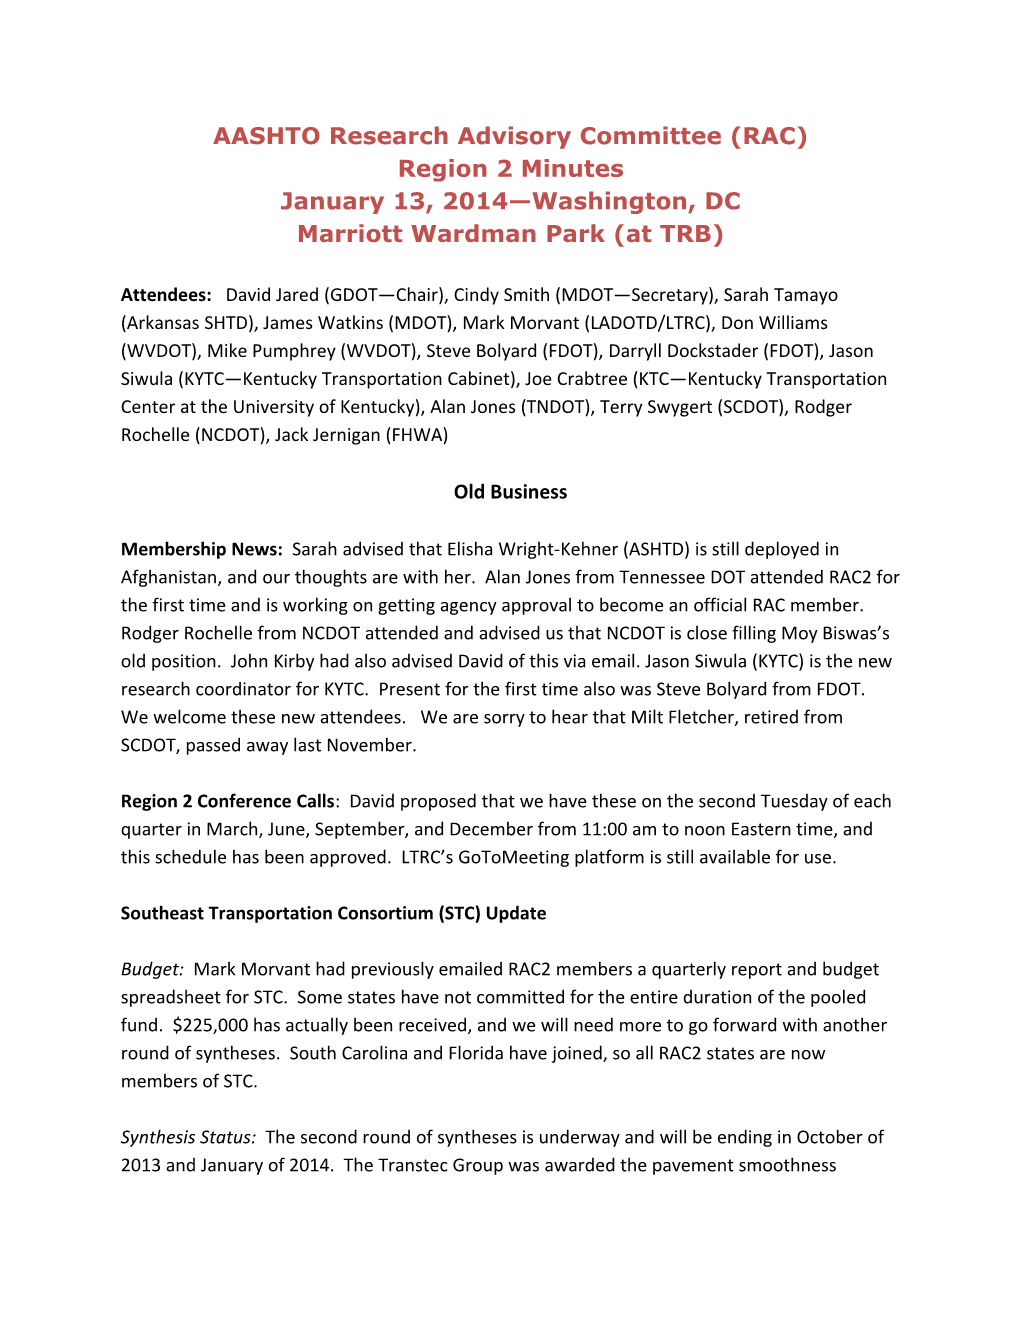 Region 2 Meeting Notes: January 13, 2014